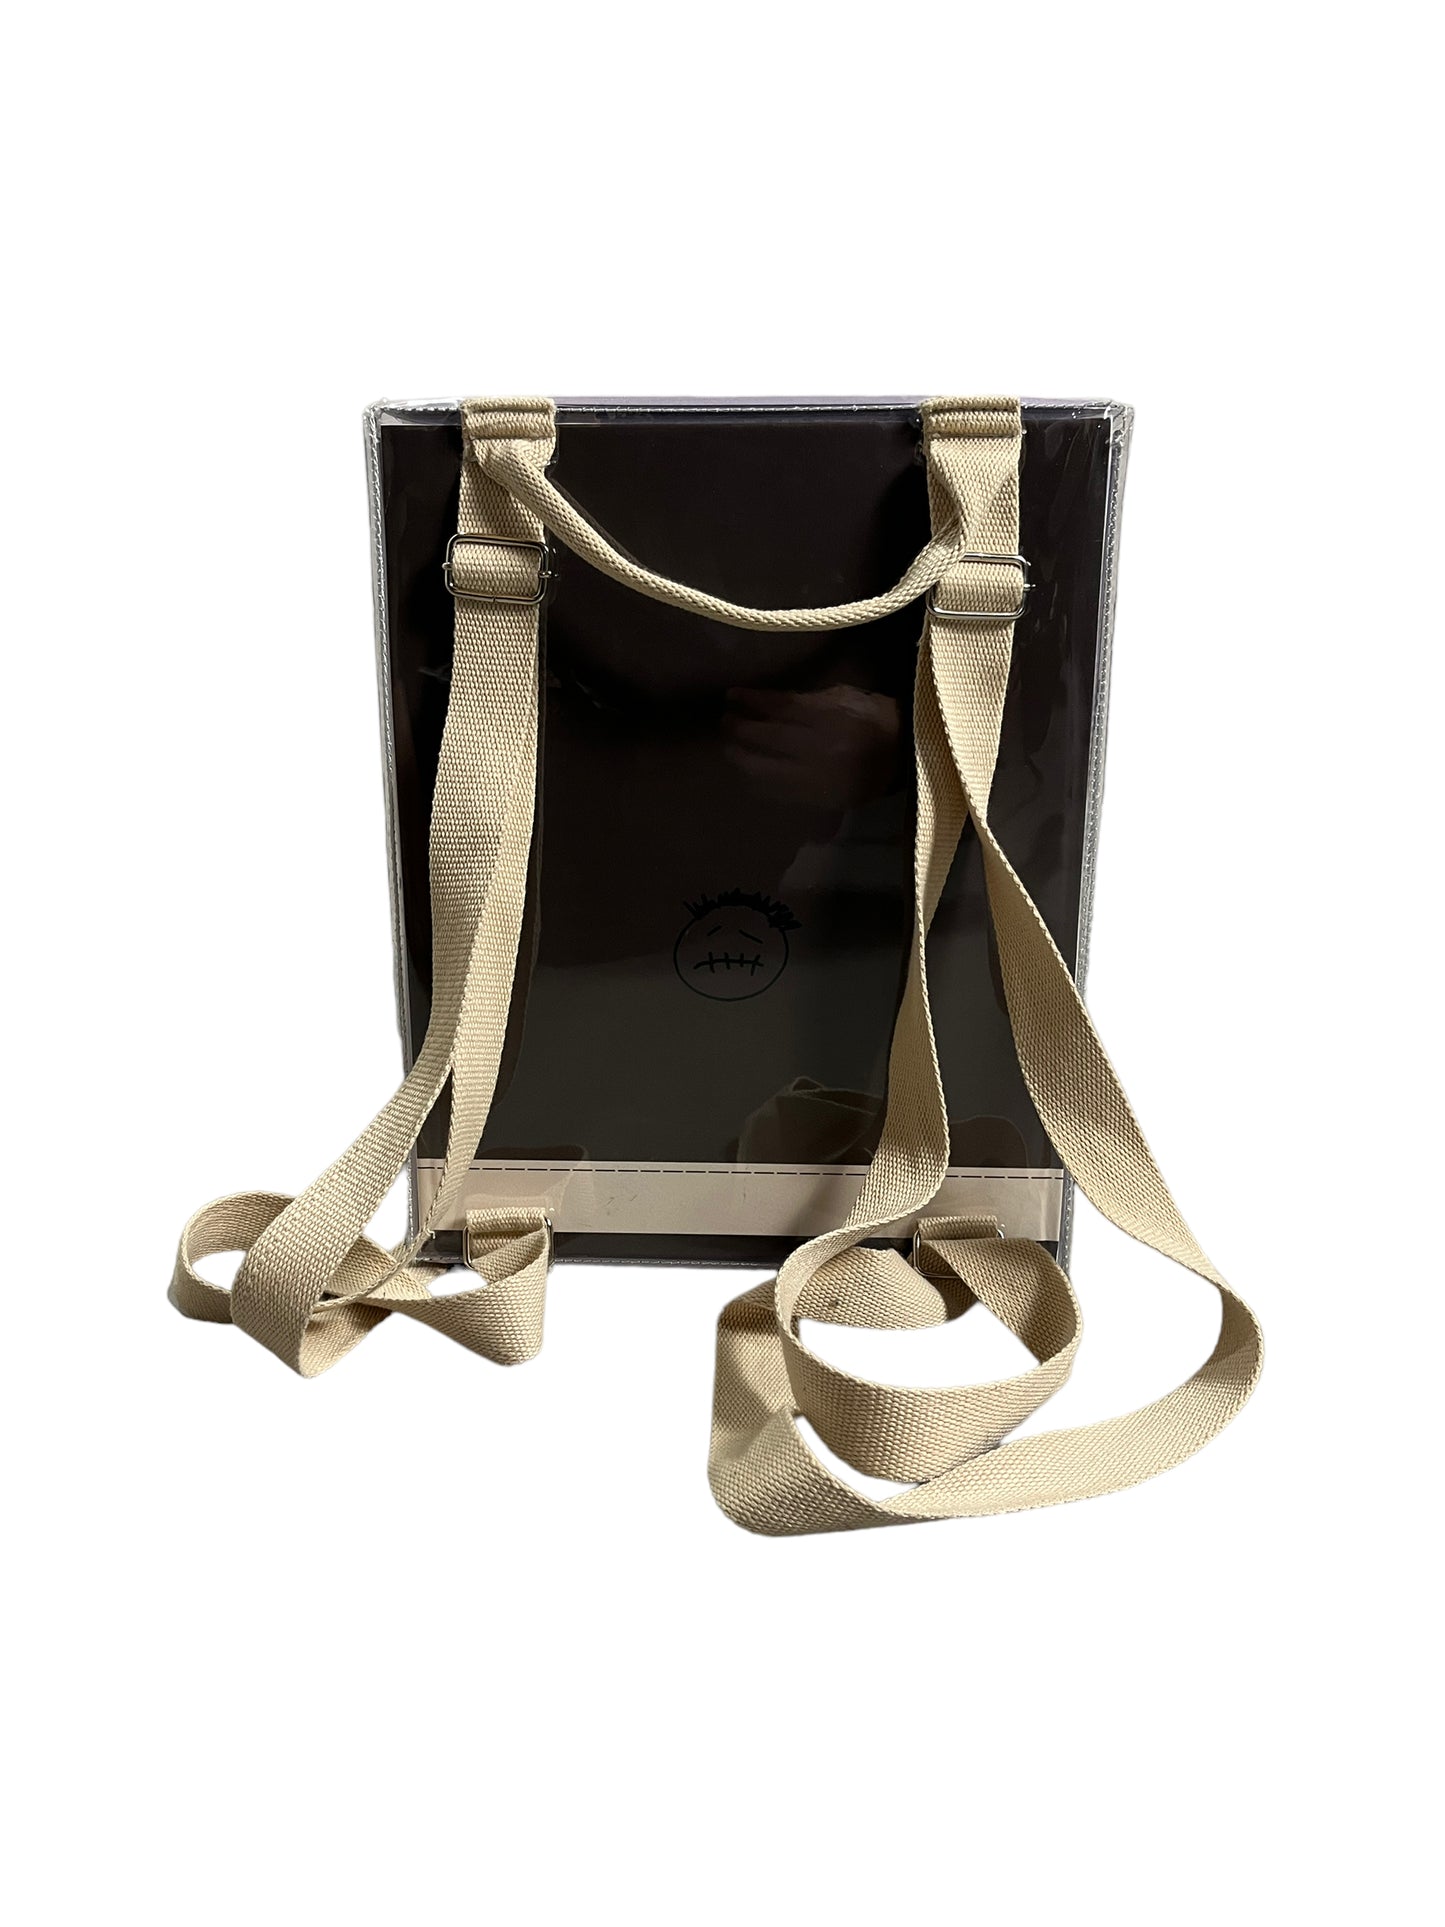 Custom Handmade Nike Box Bags - Large (Black)